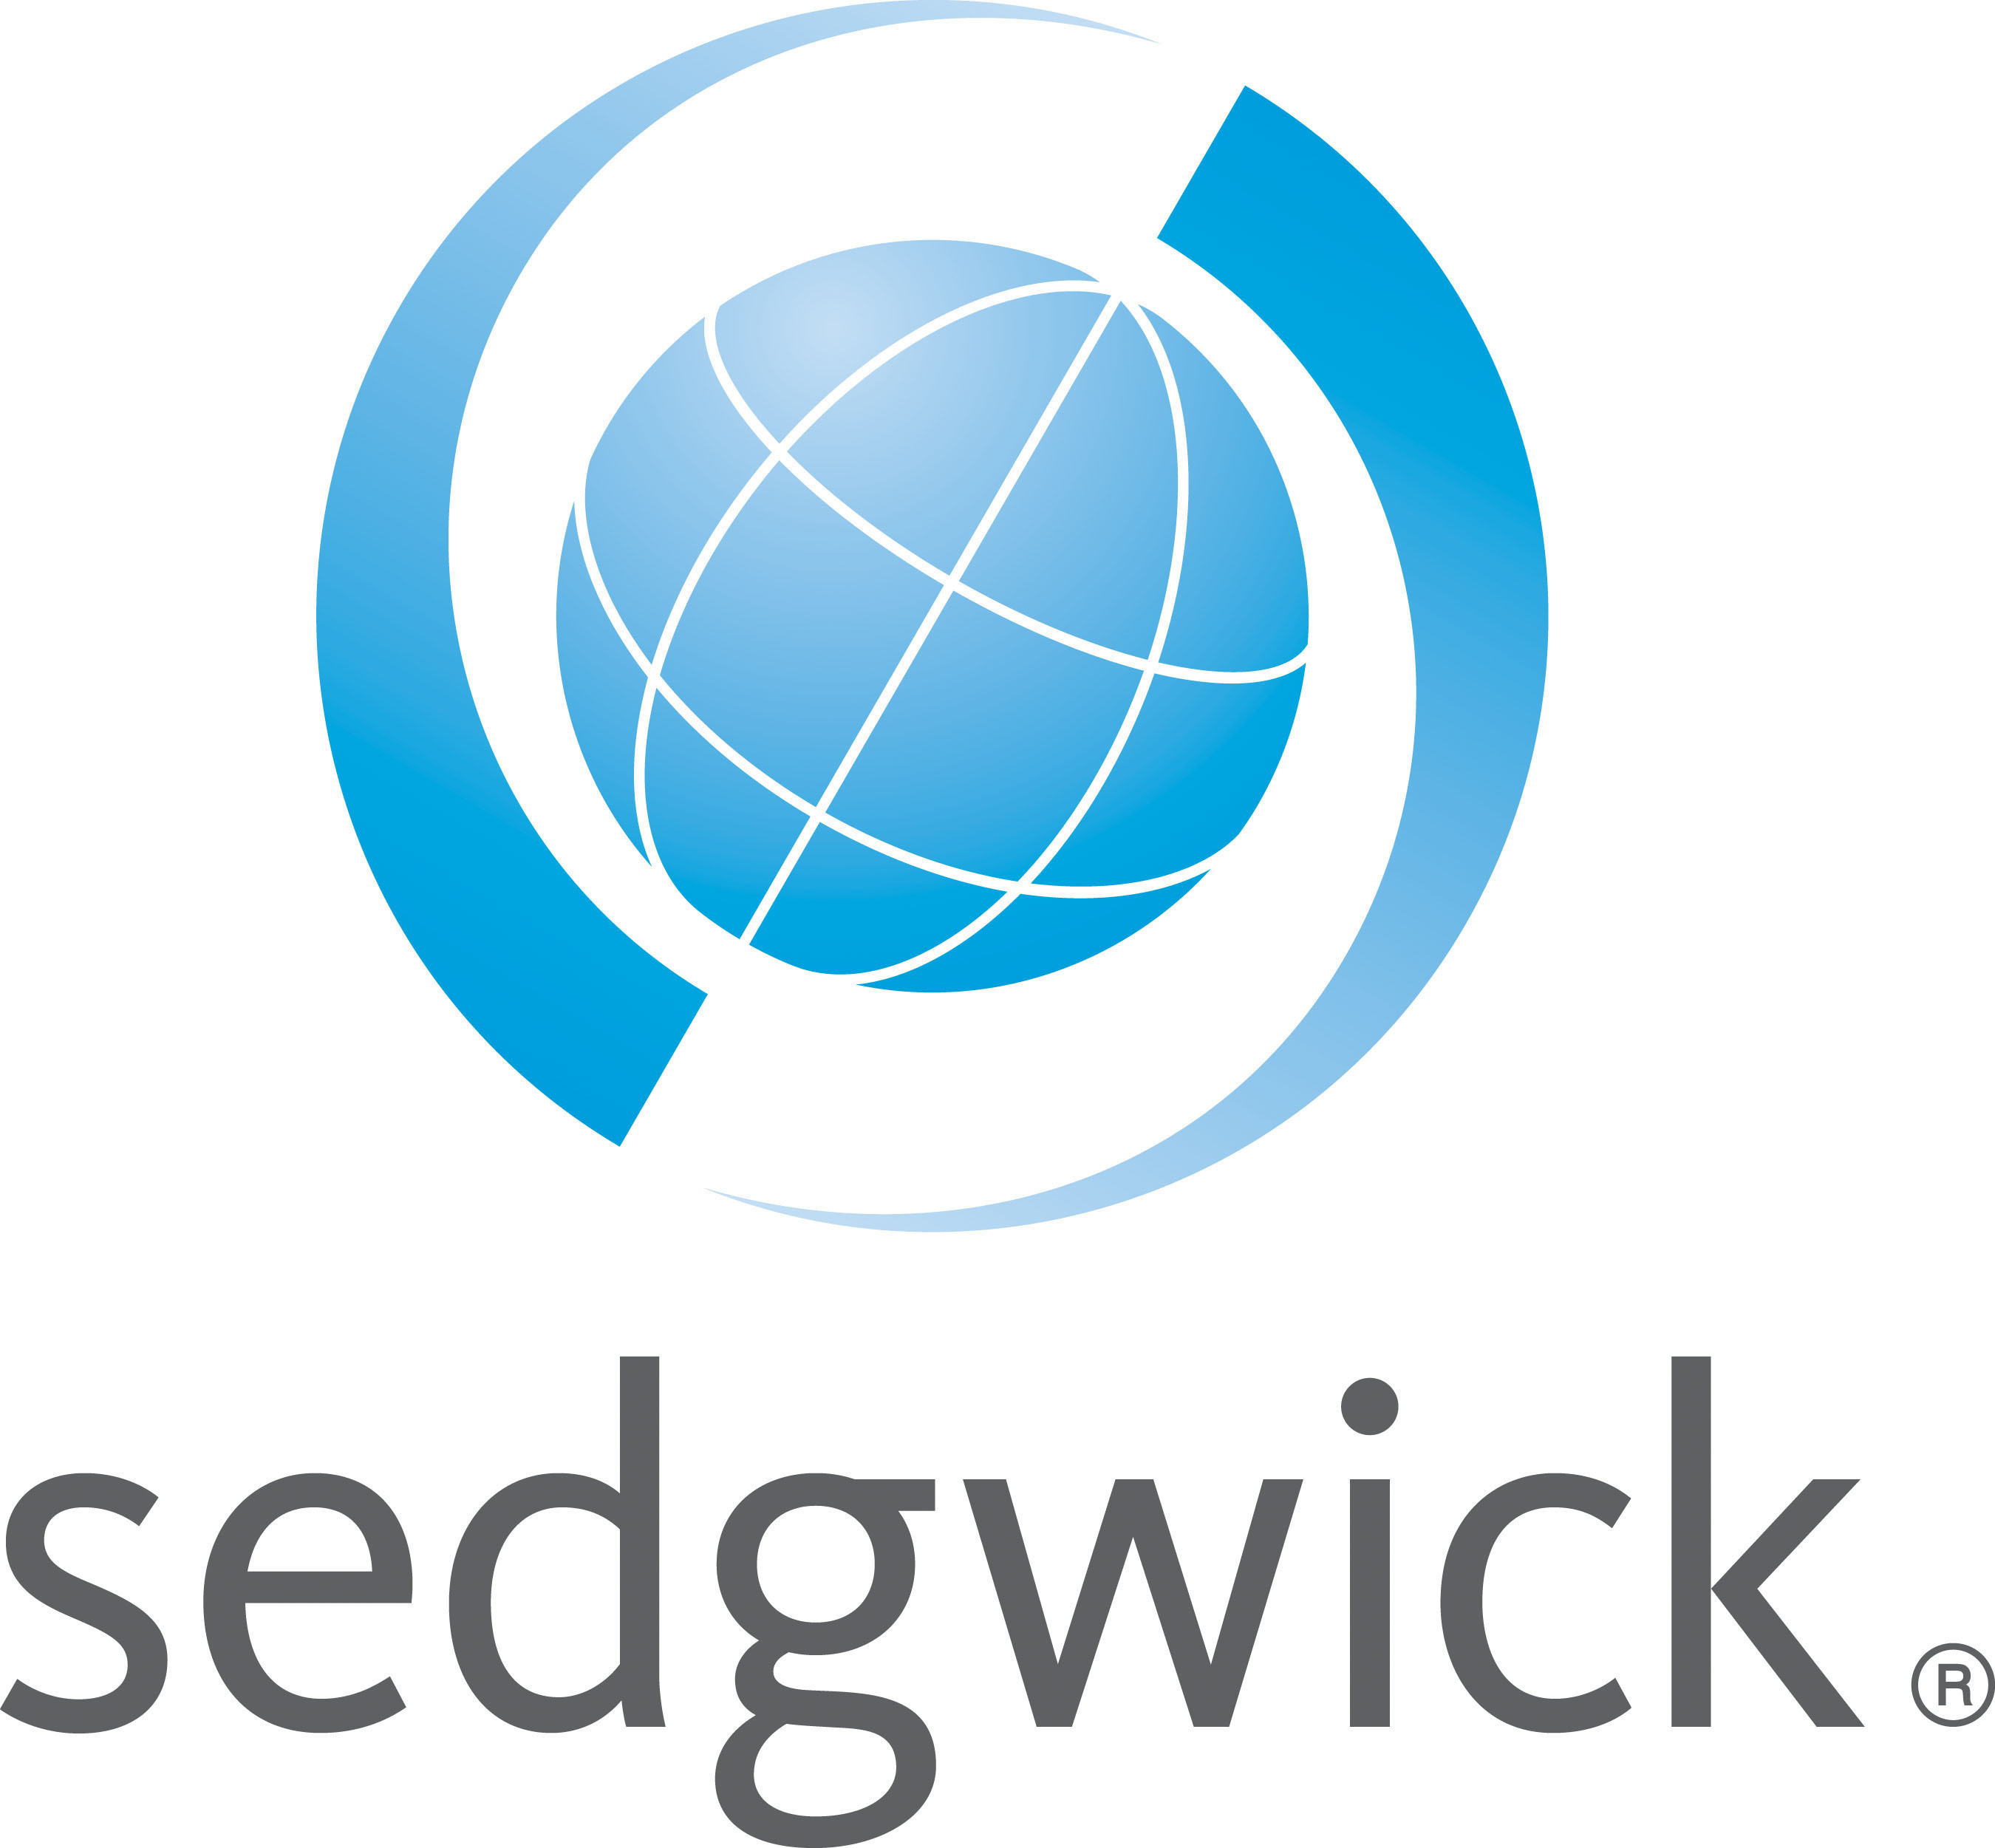 Sedgwick Logo